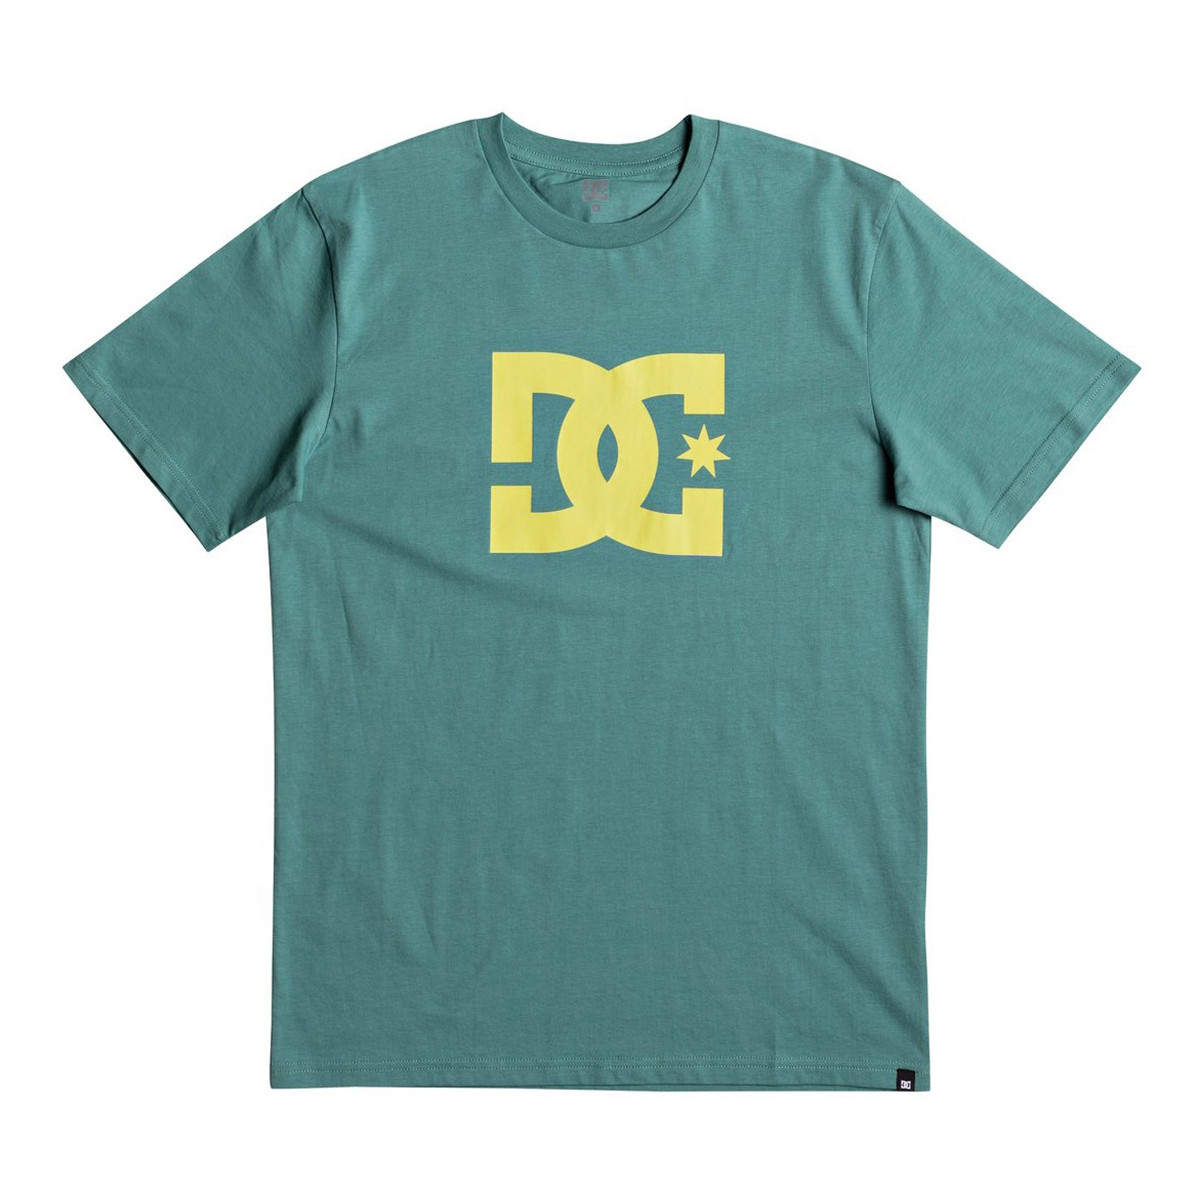 DC T-Shirt Star Deep Sea/Snapdragon